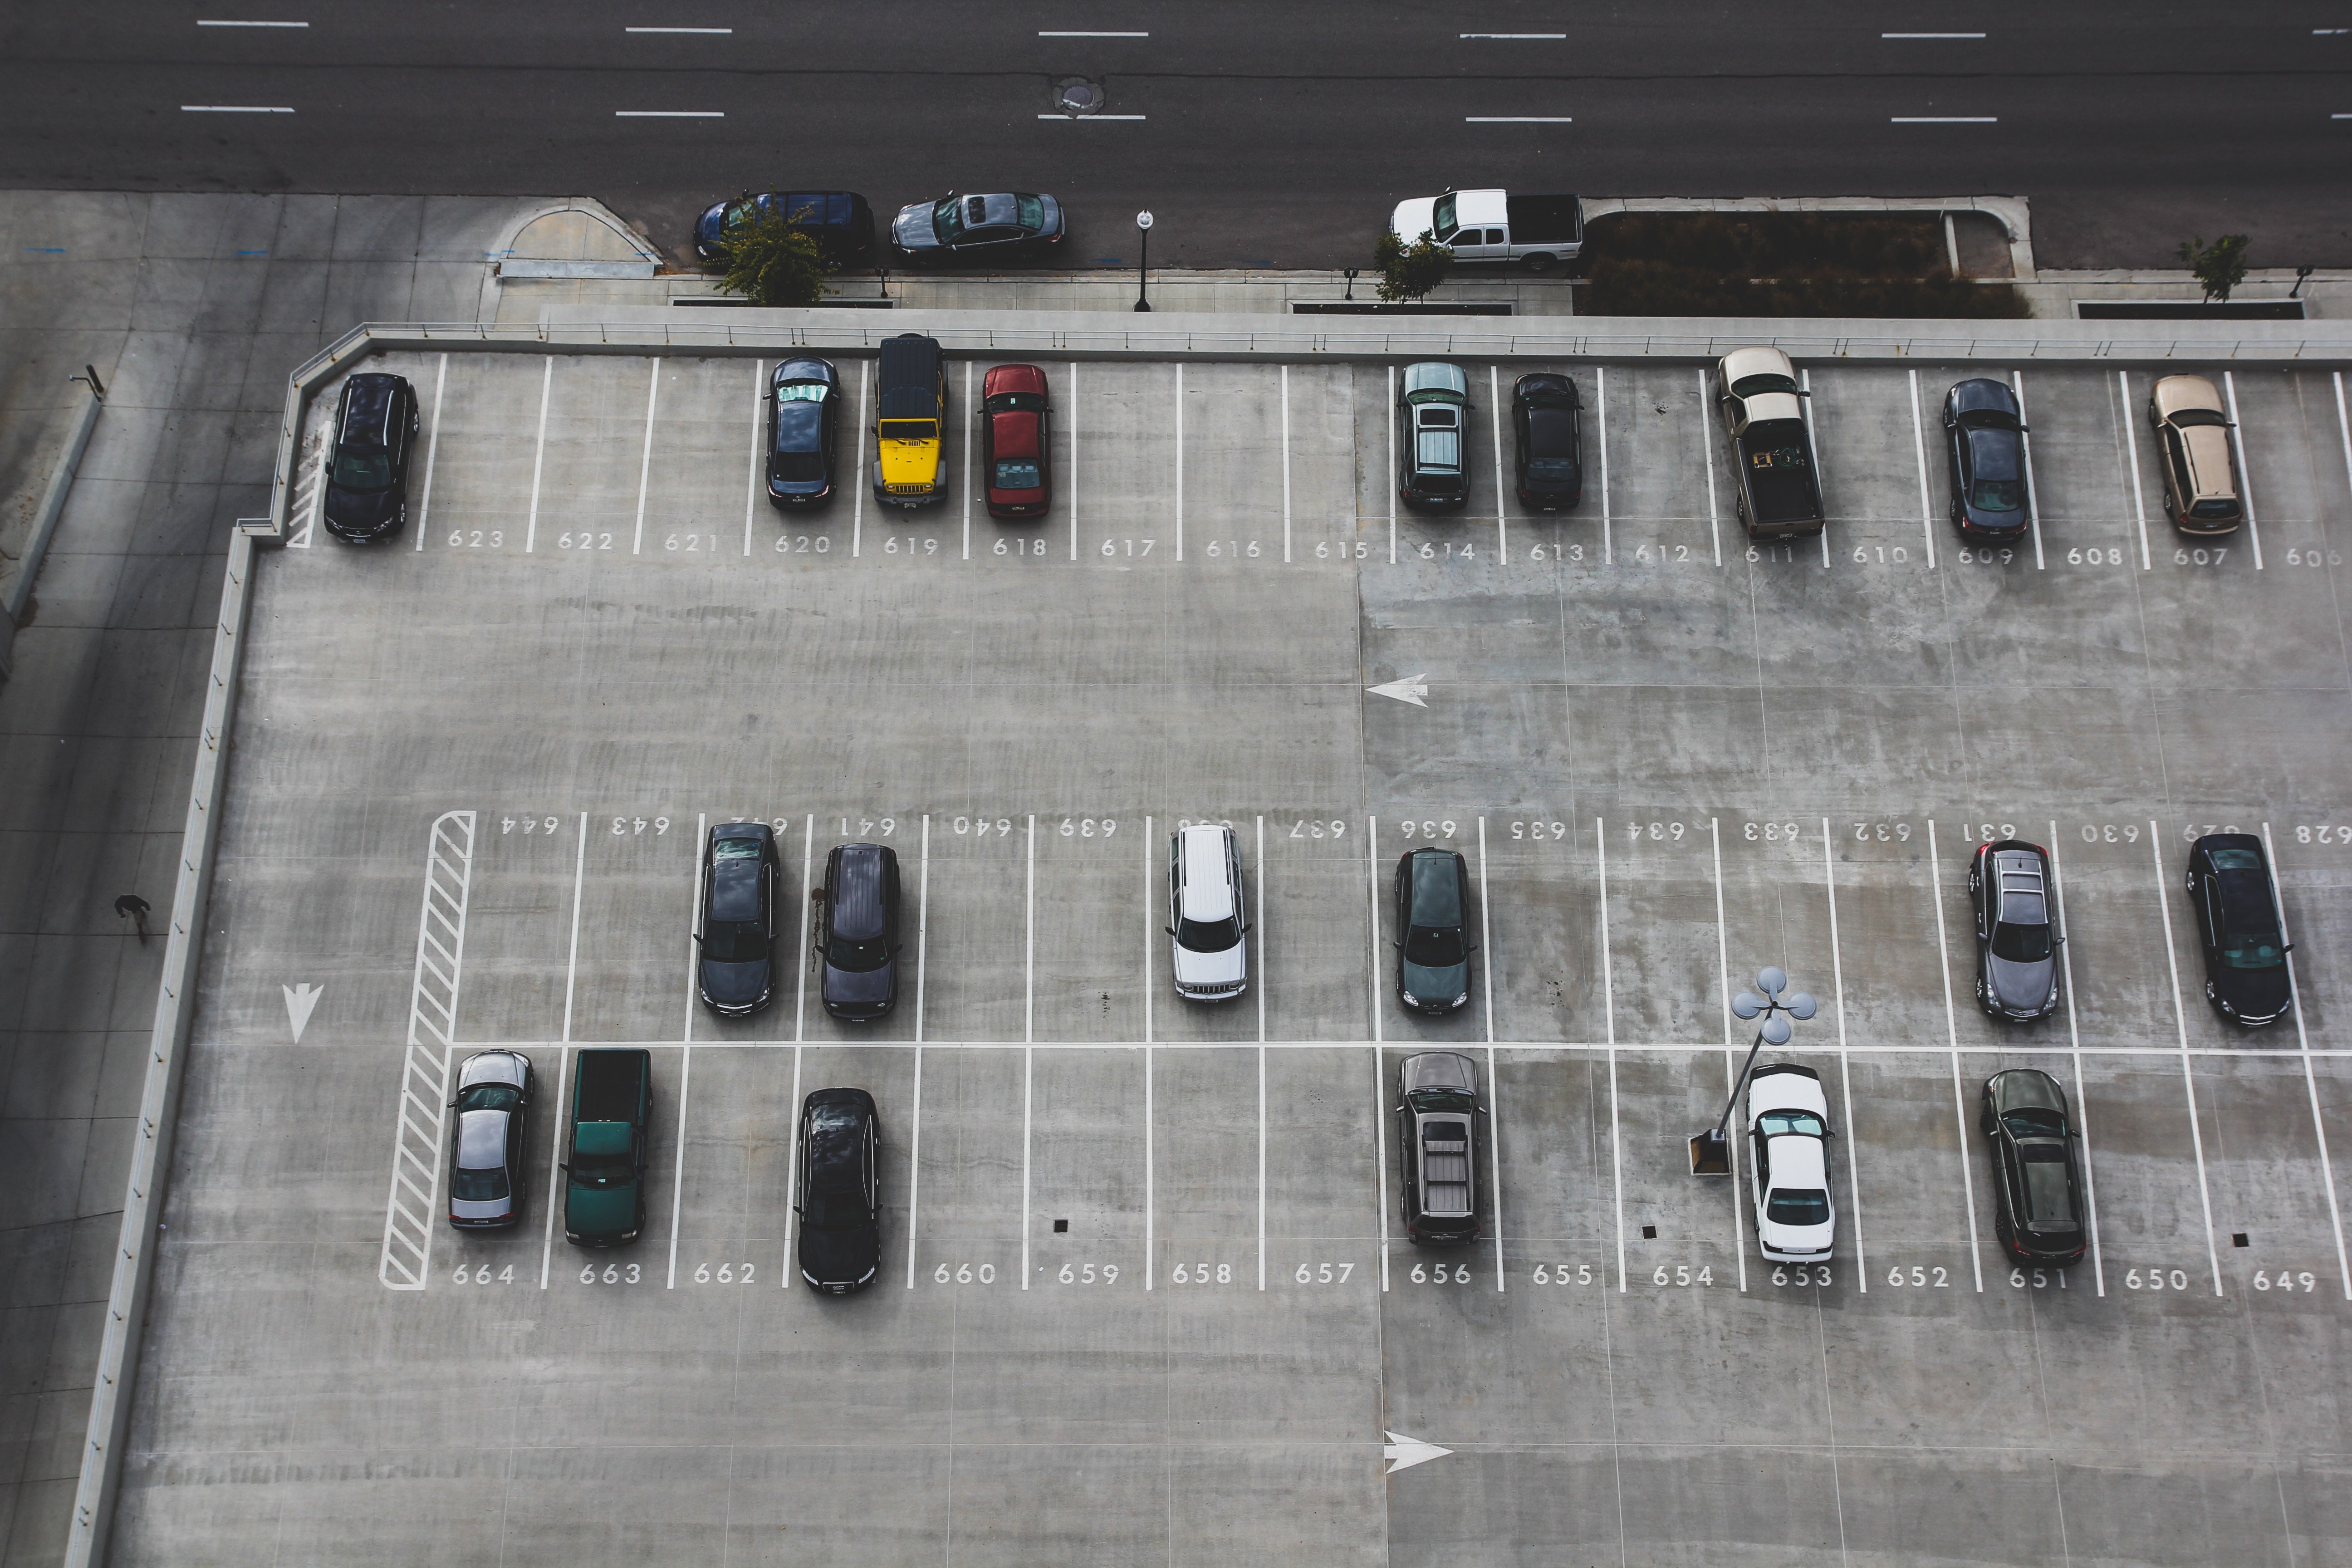 An aerial view of a parking lot | Source: Unsplash.com